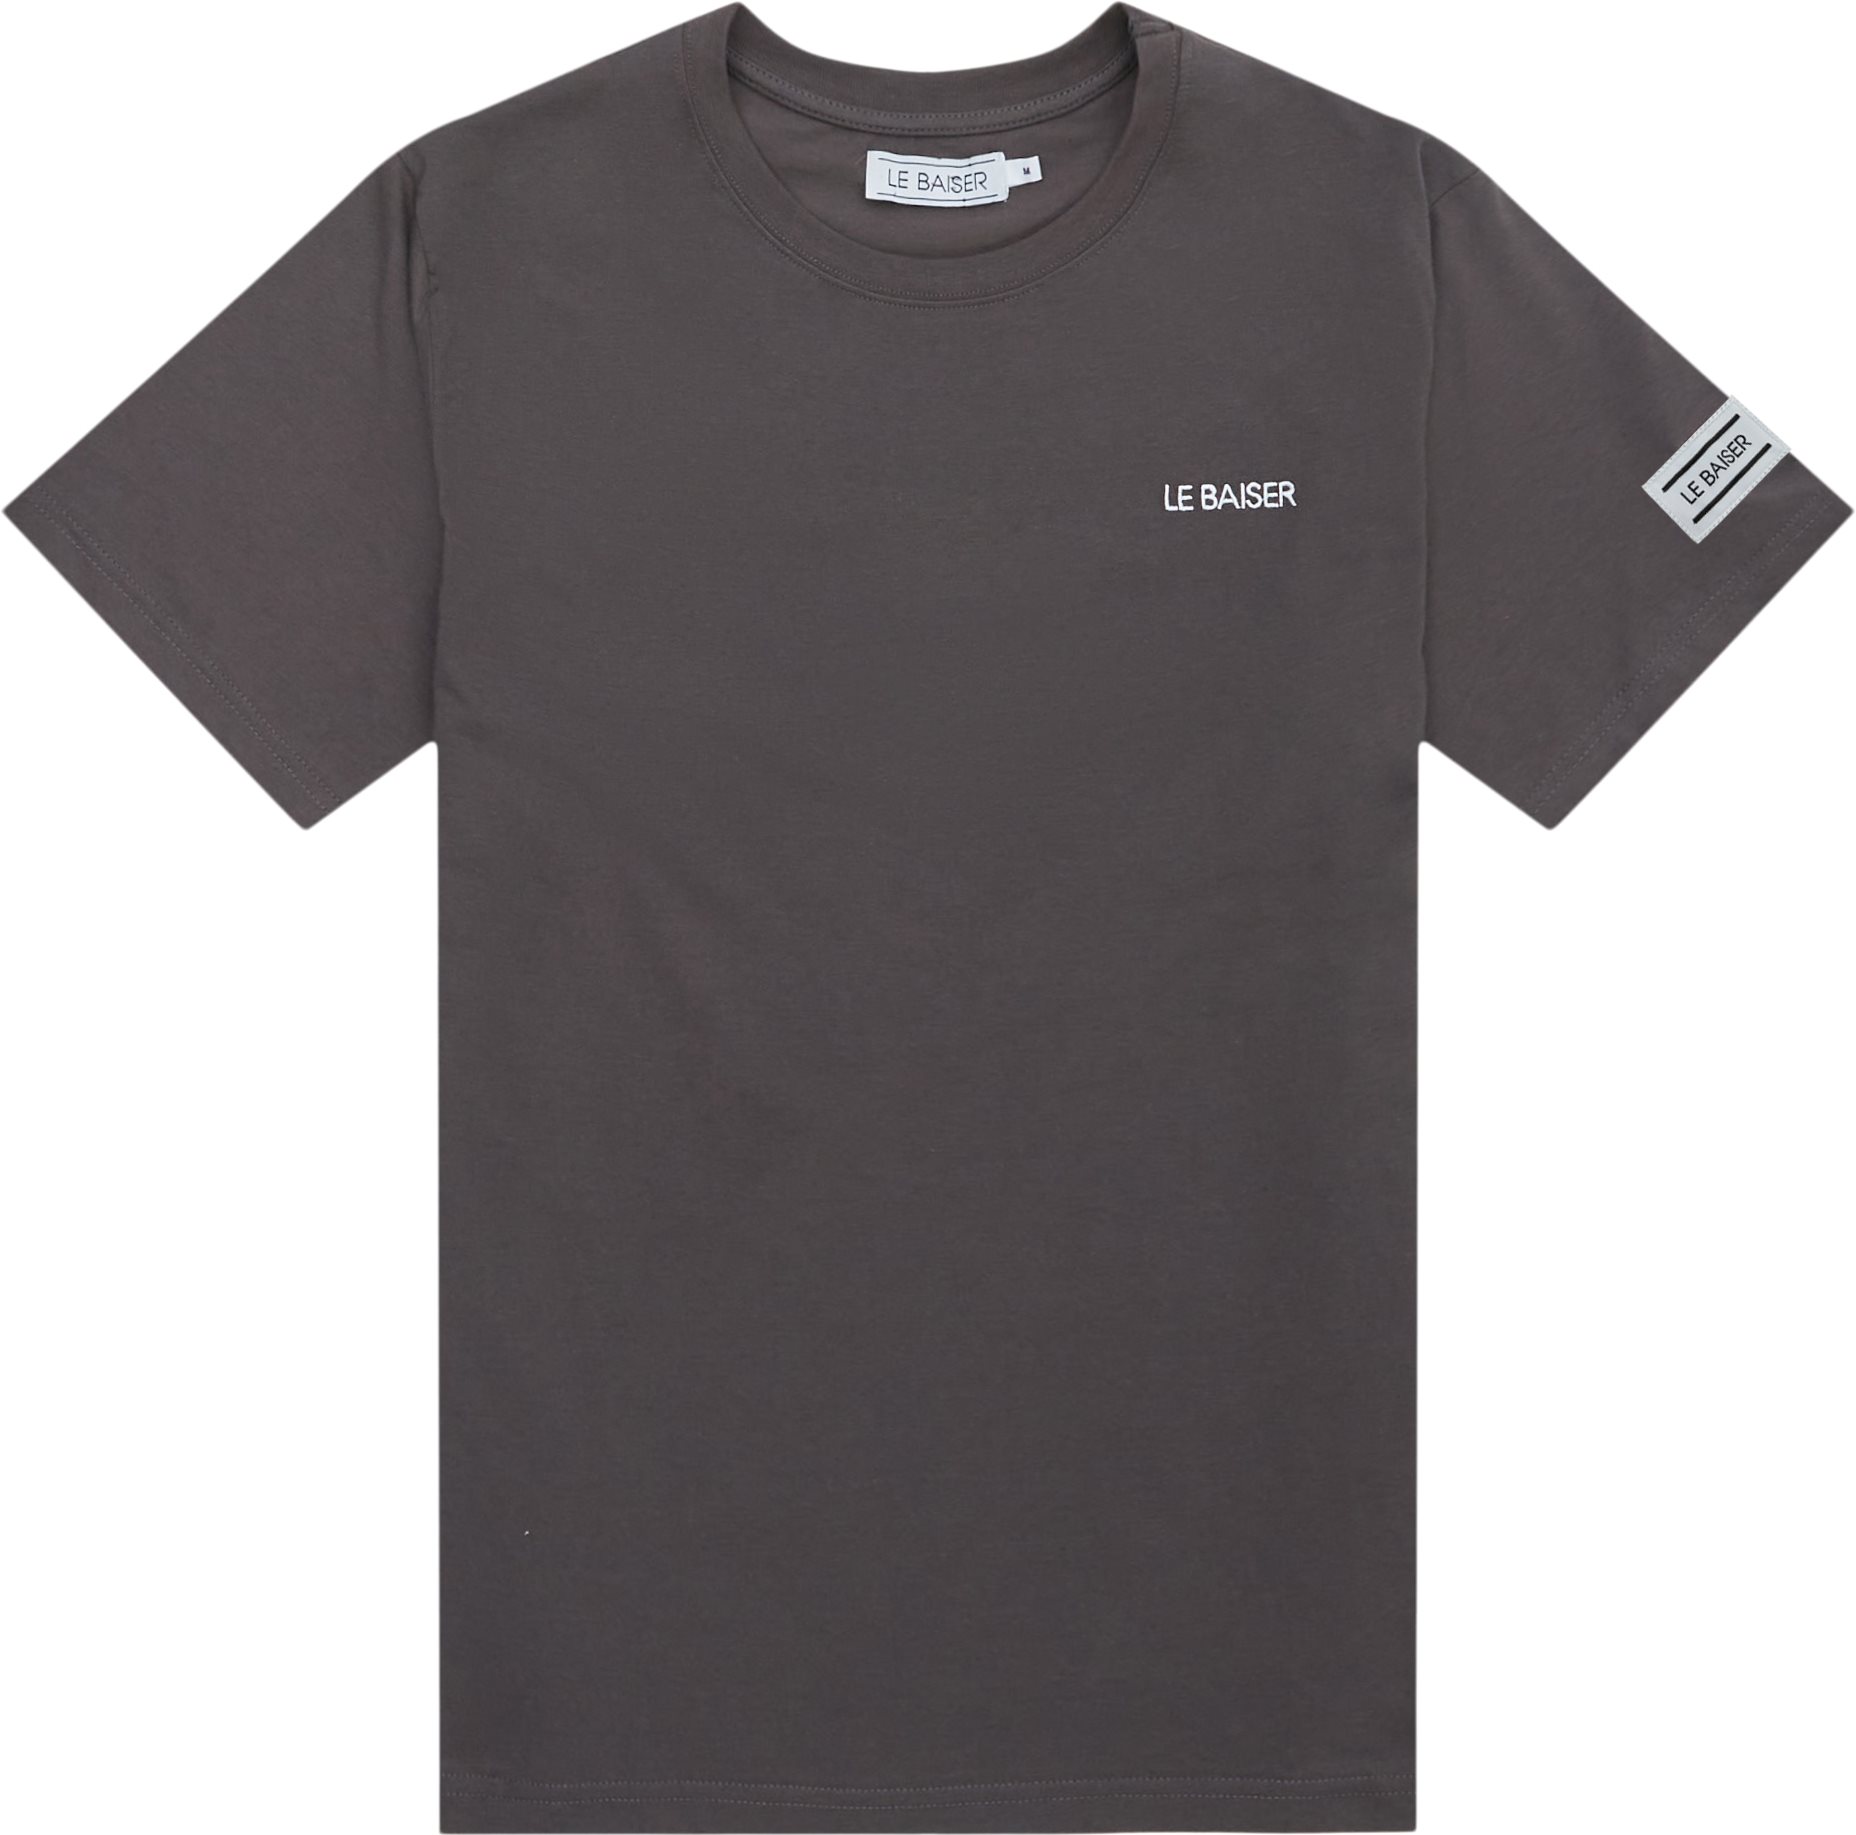 Bourg Tee - T-shirts - Regular fit - Grå